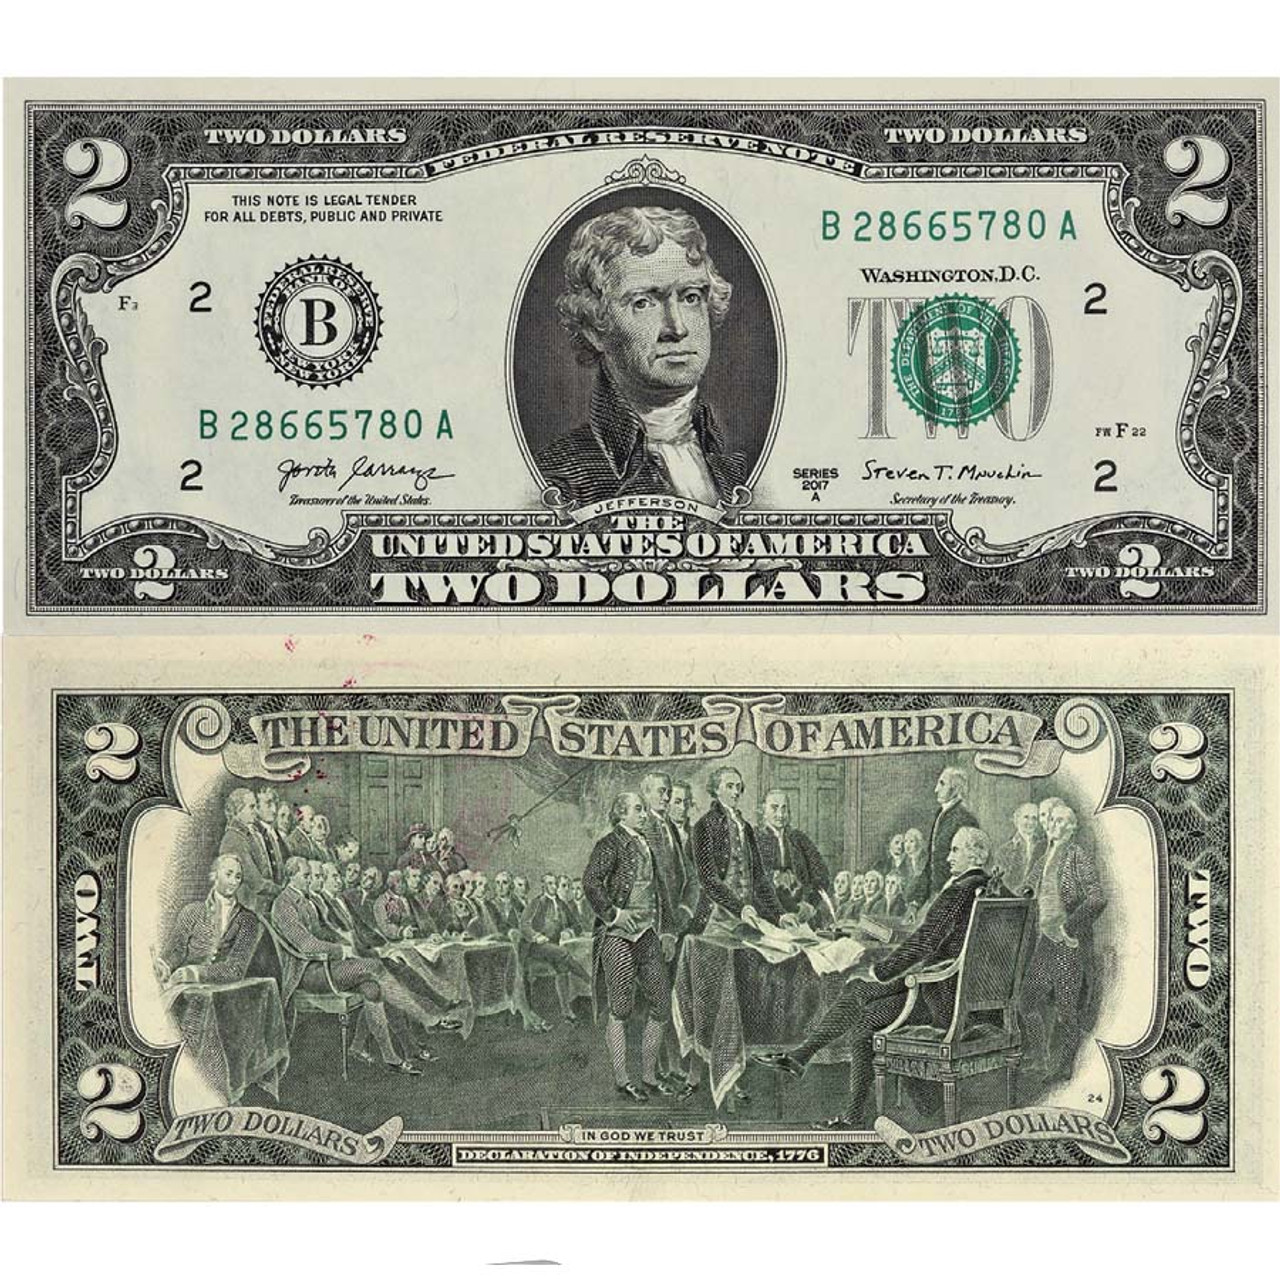 2017 two dollar bill